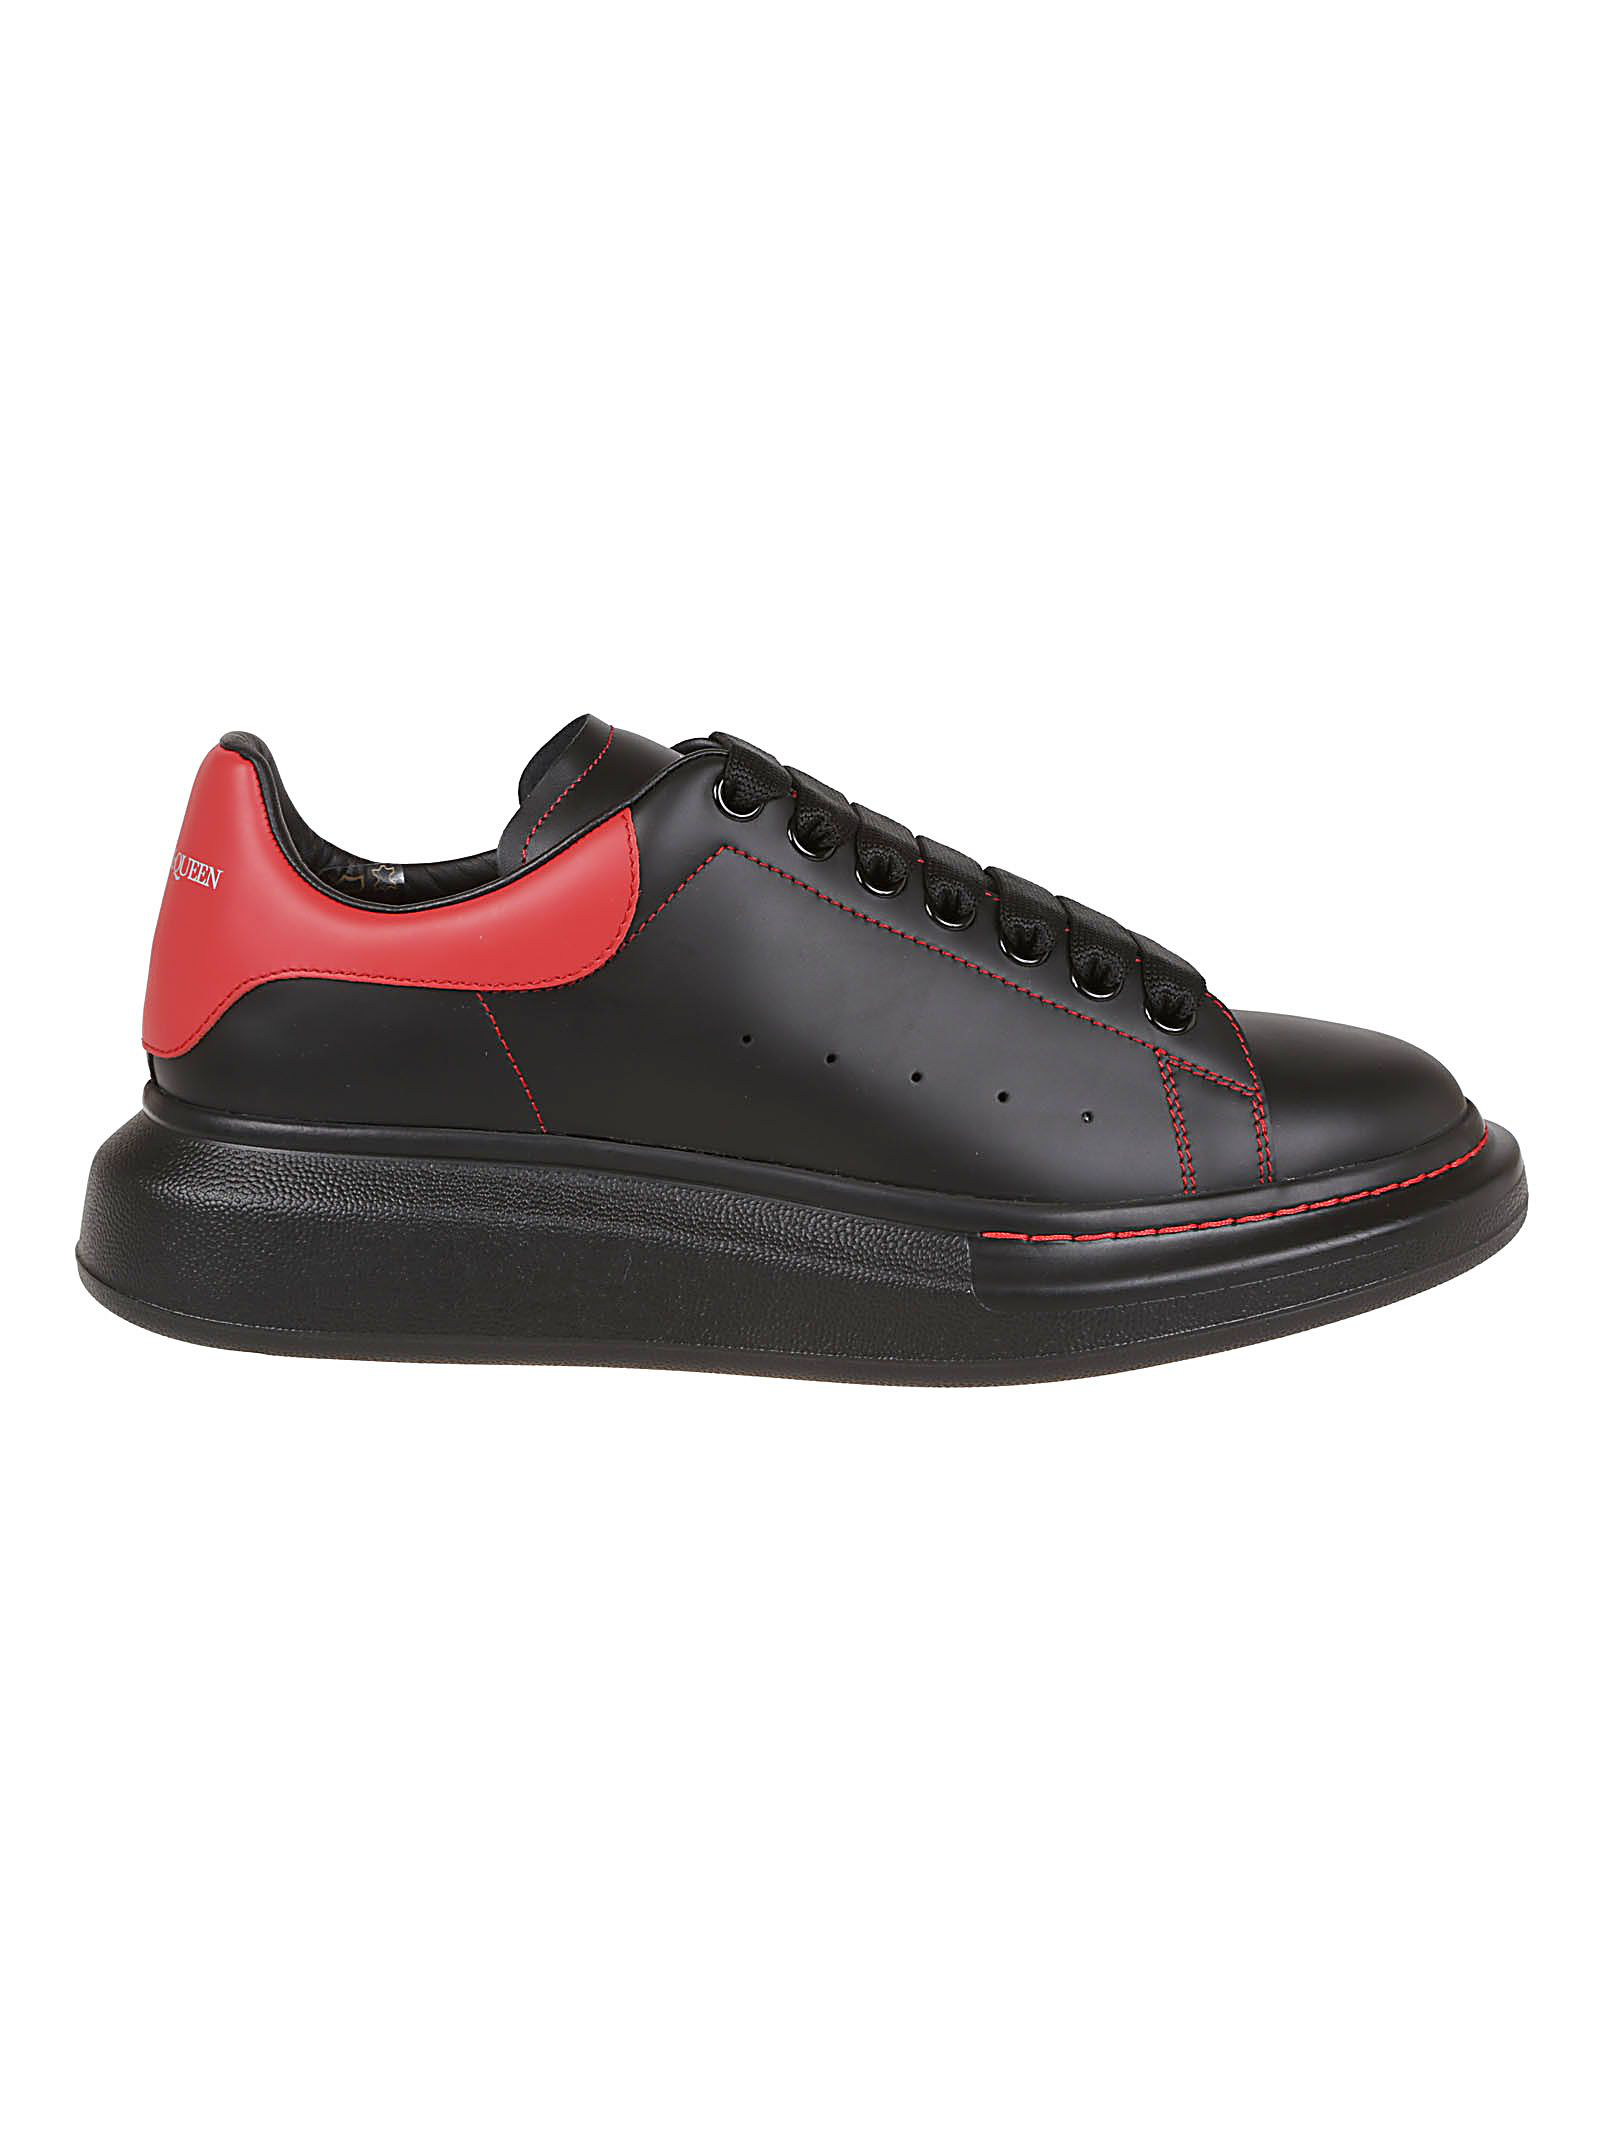 Alexander Mcqueen Oversized Sneaker In Black/lust Red | ModeSens